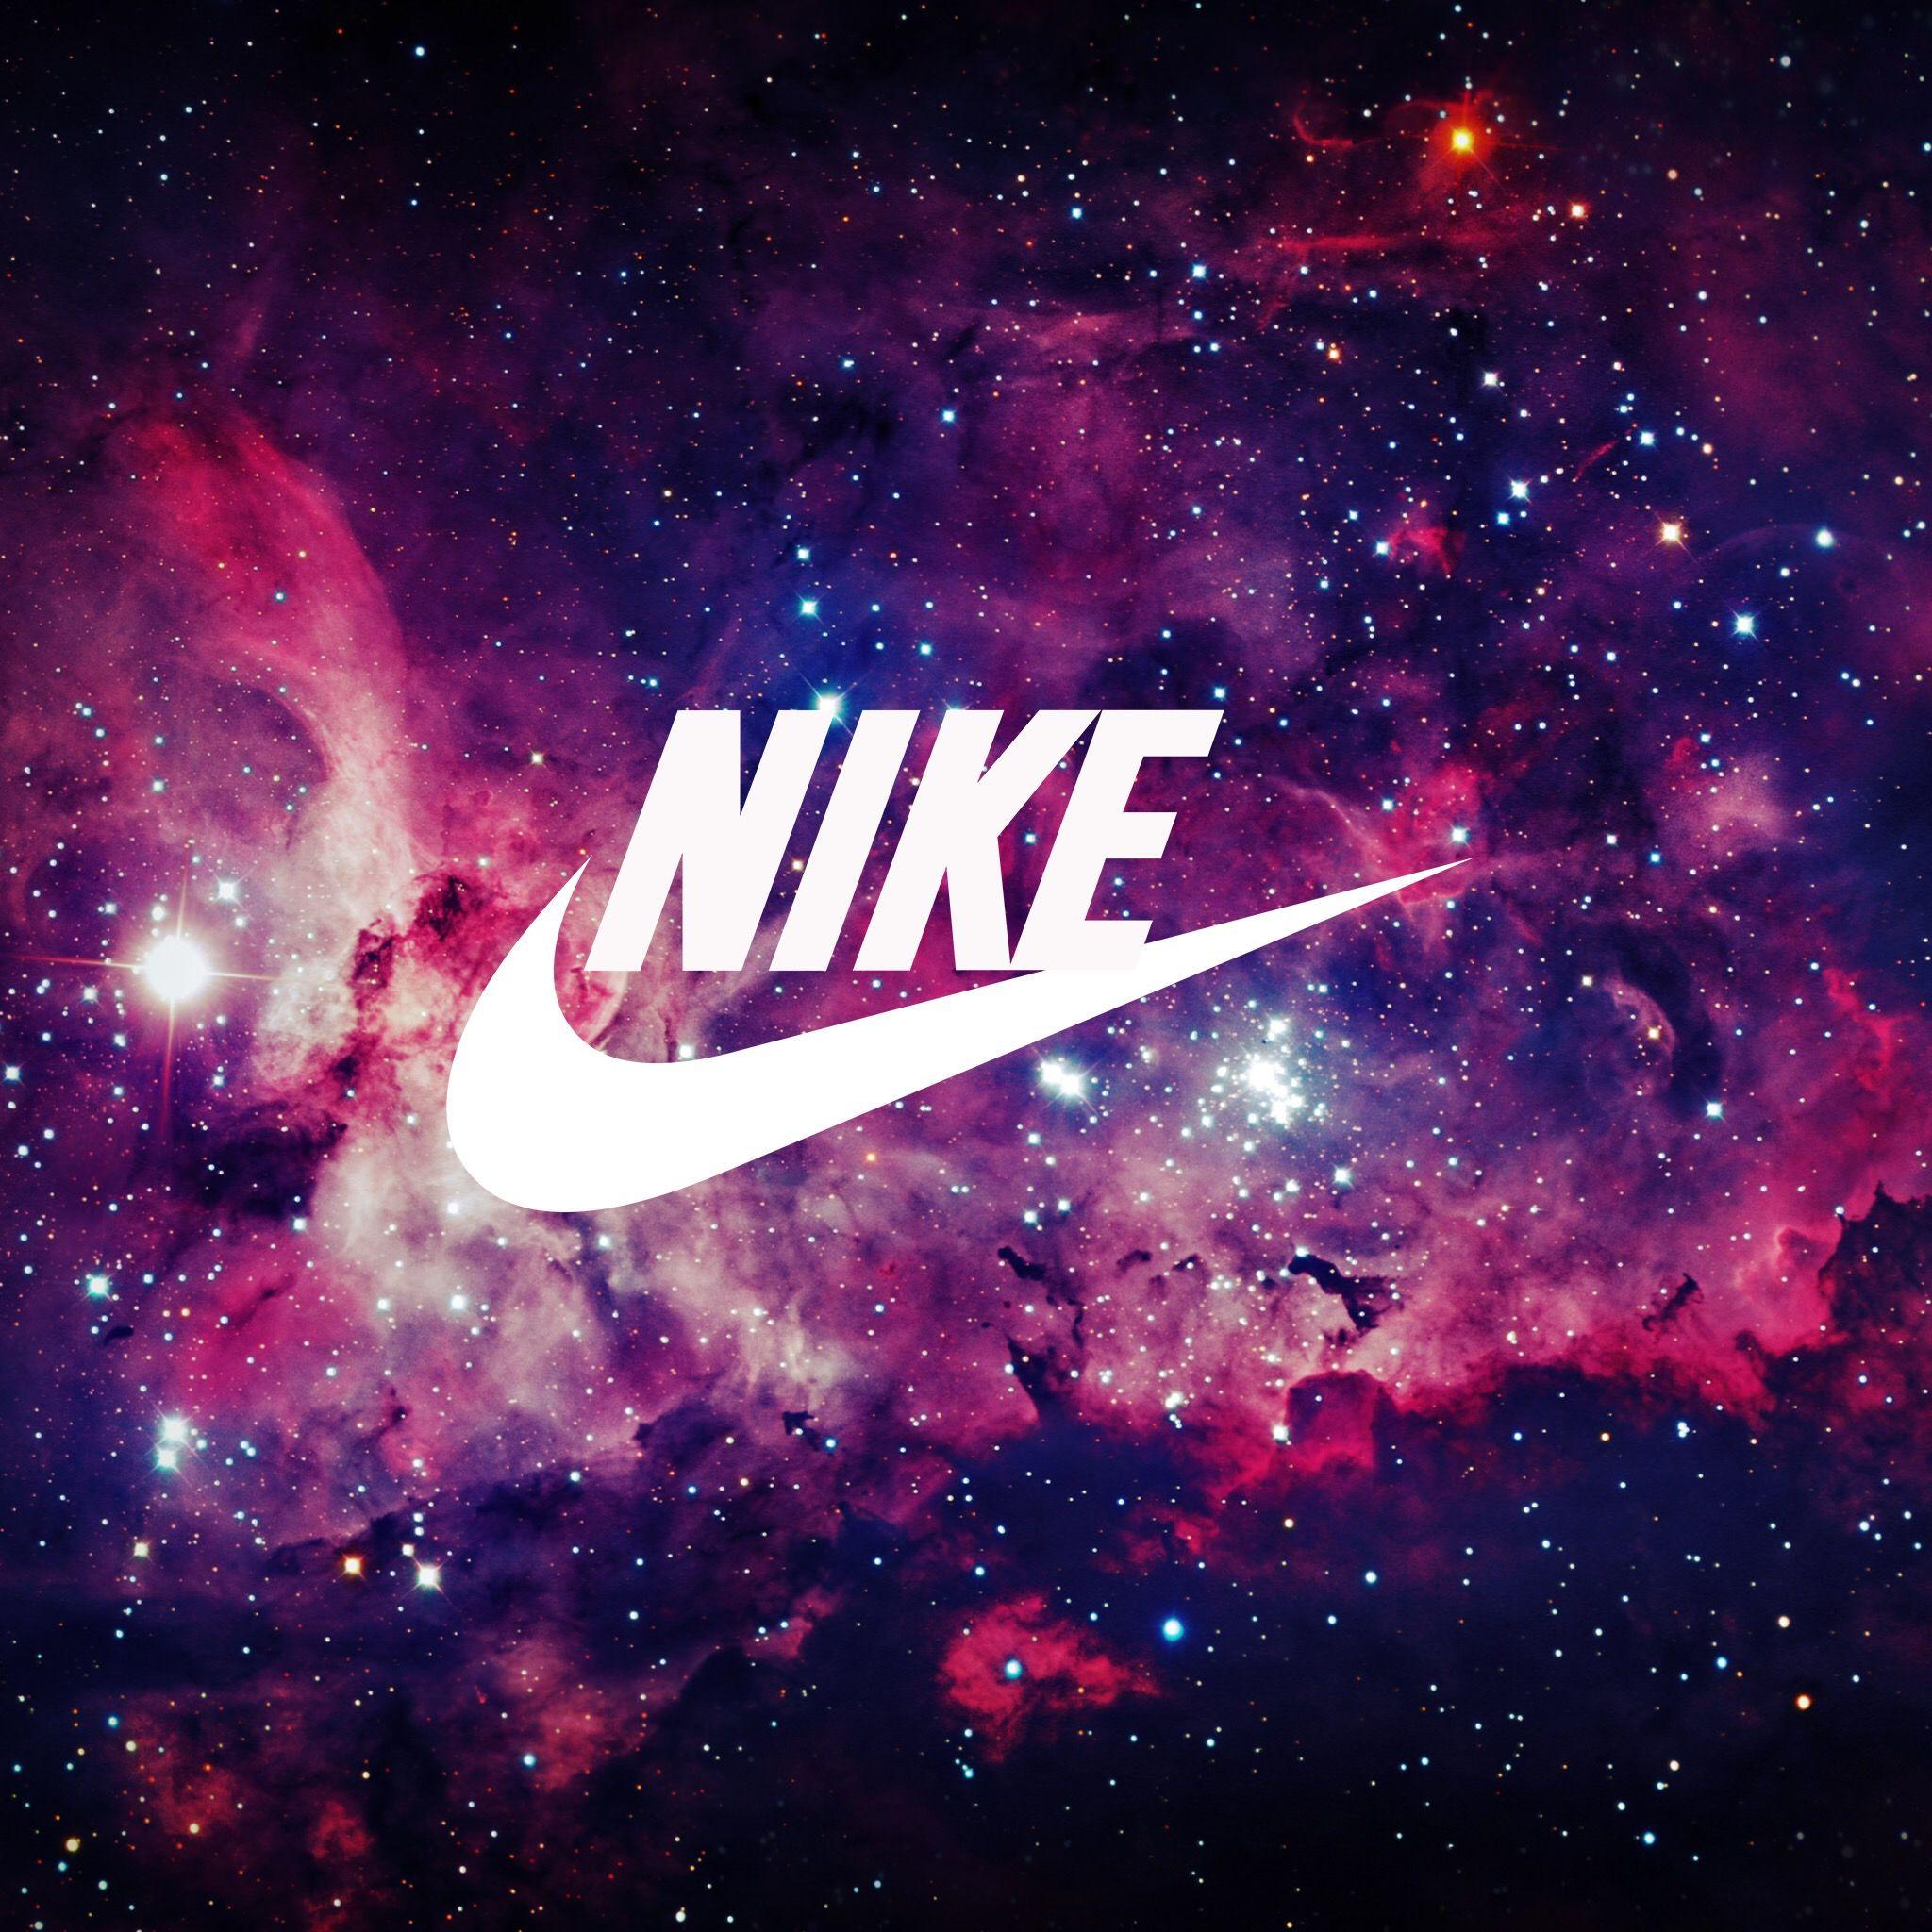 750 Nike Wallpapers ideas | nike wallpaper, nike, nike logo wallpapers